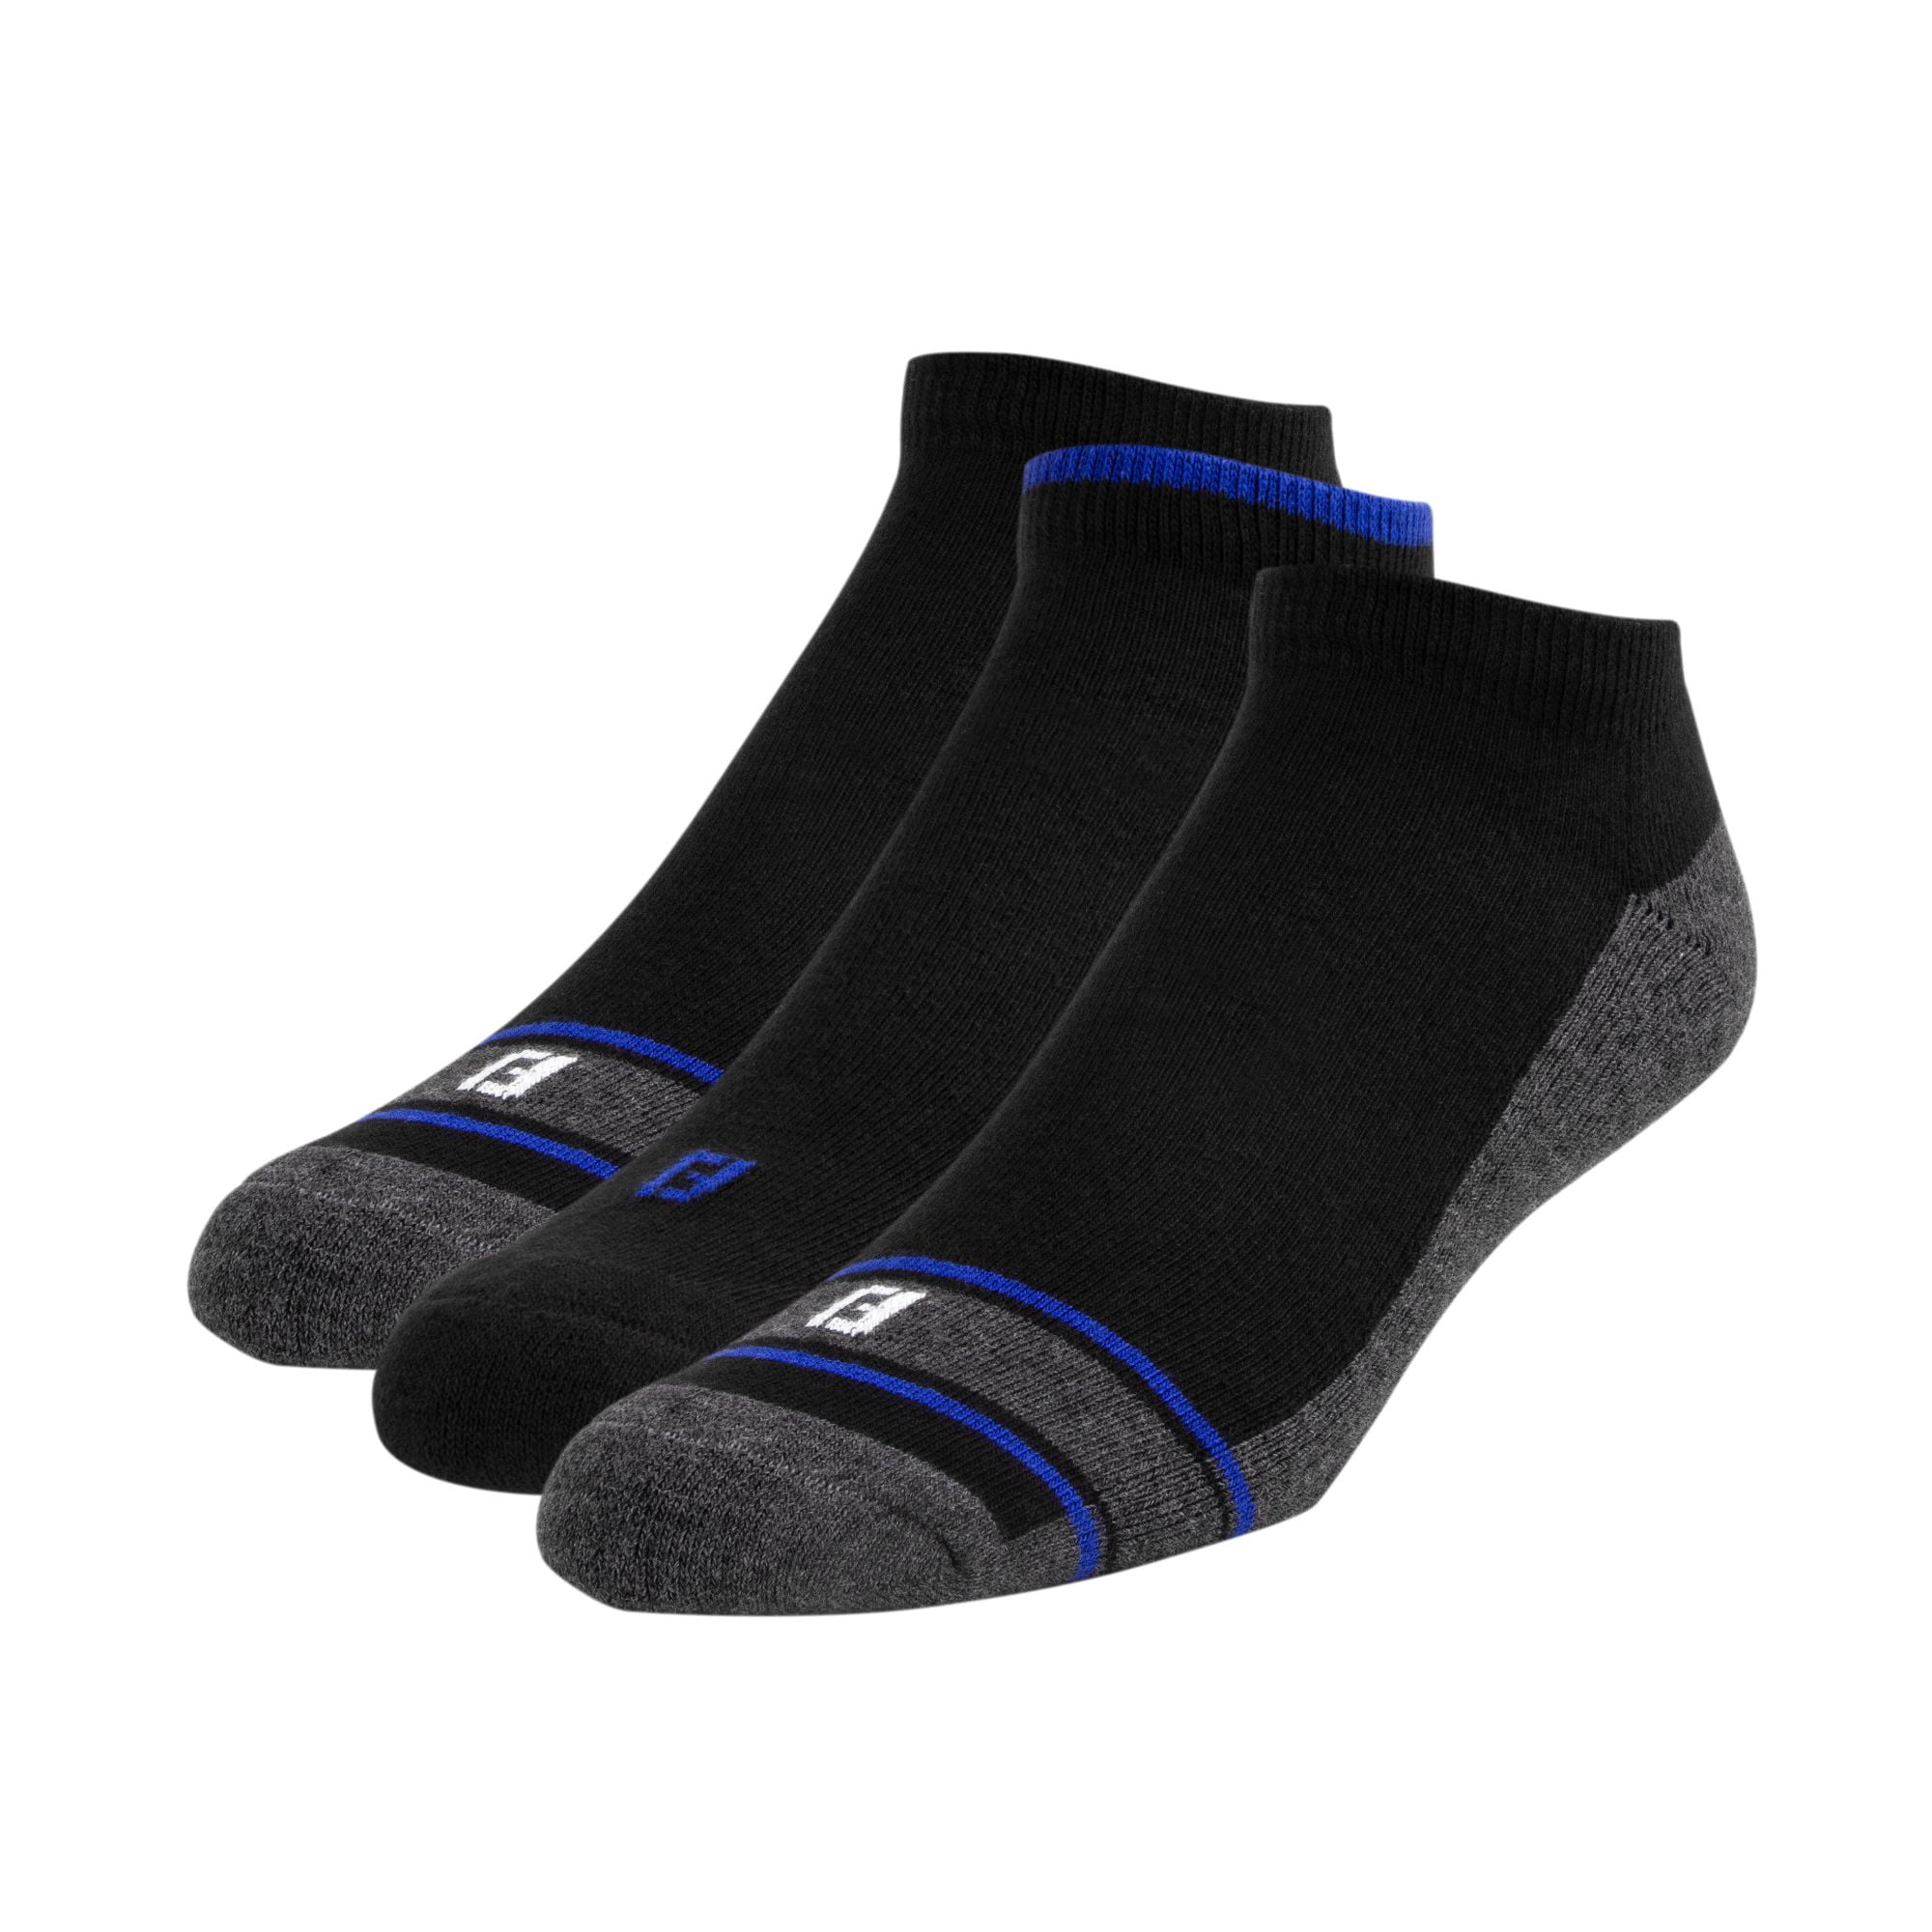 FootJoy FootJoy Men's ComfortSof Low Cut Golf Socks 3 Pack